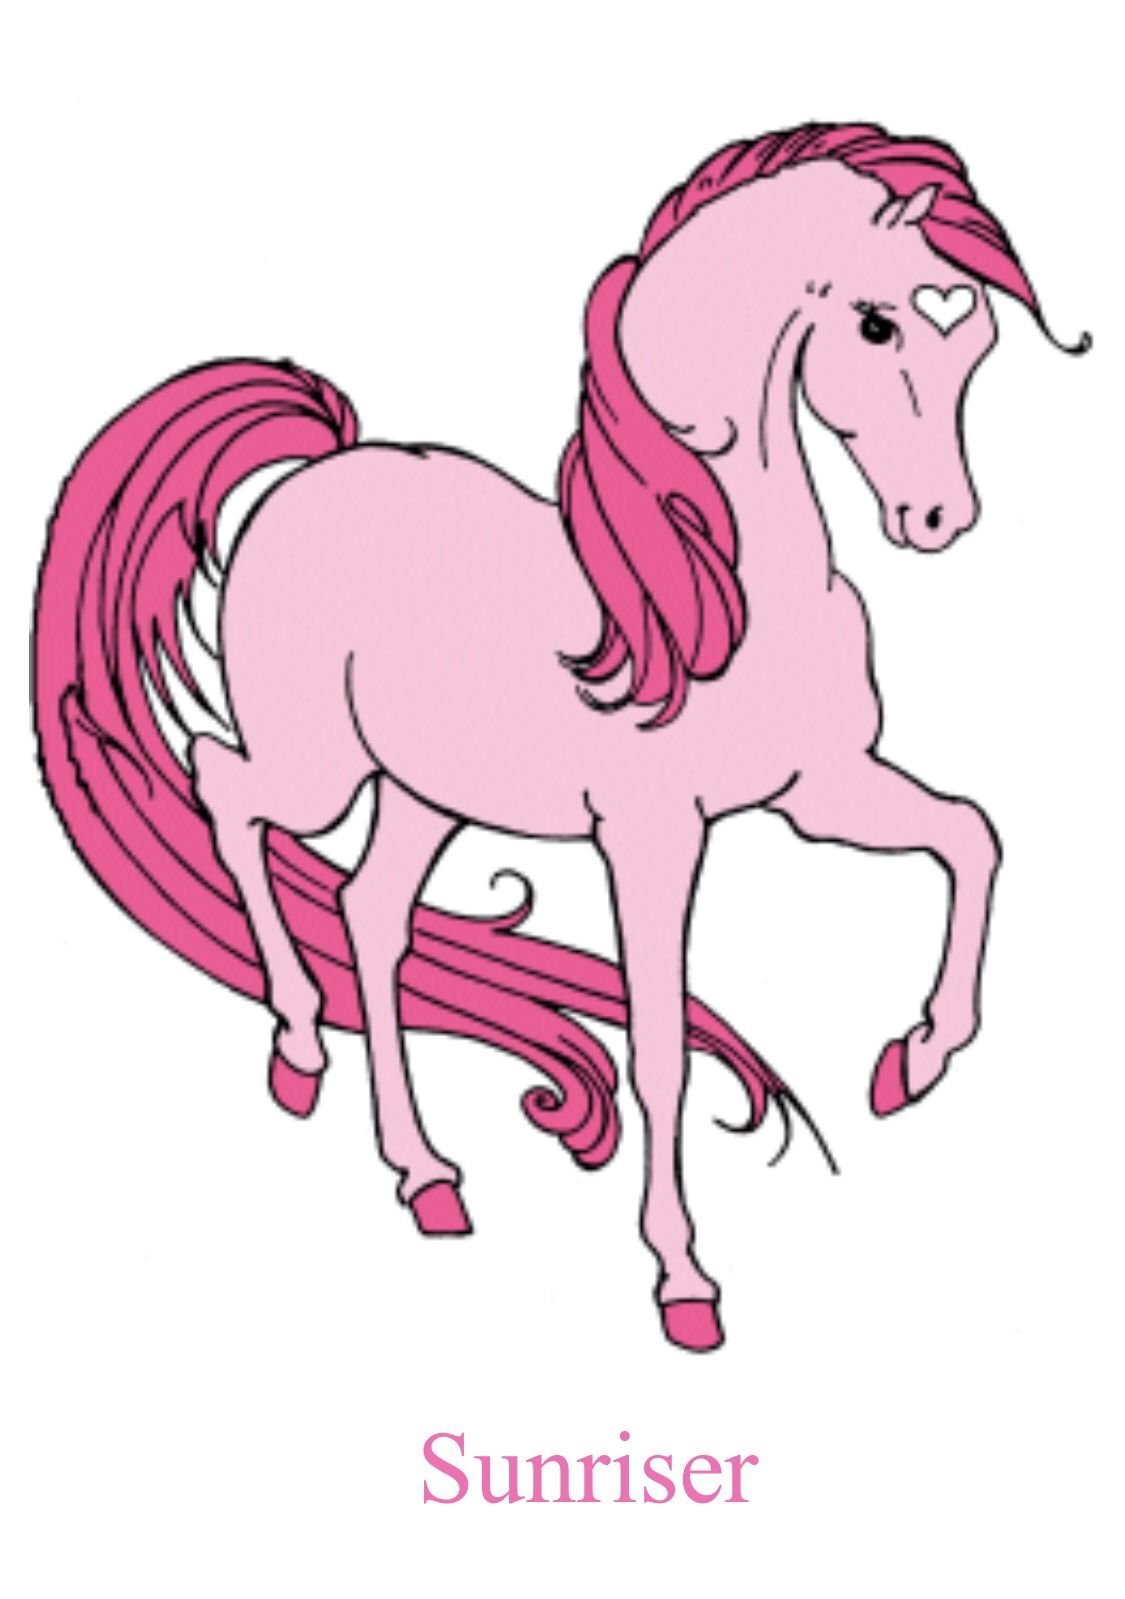 Афанасьев розовый конь